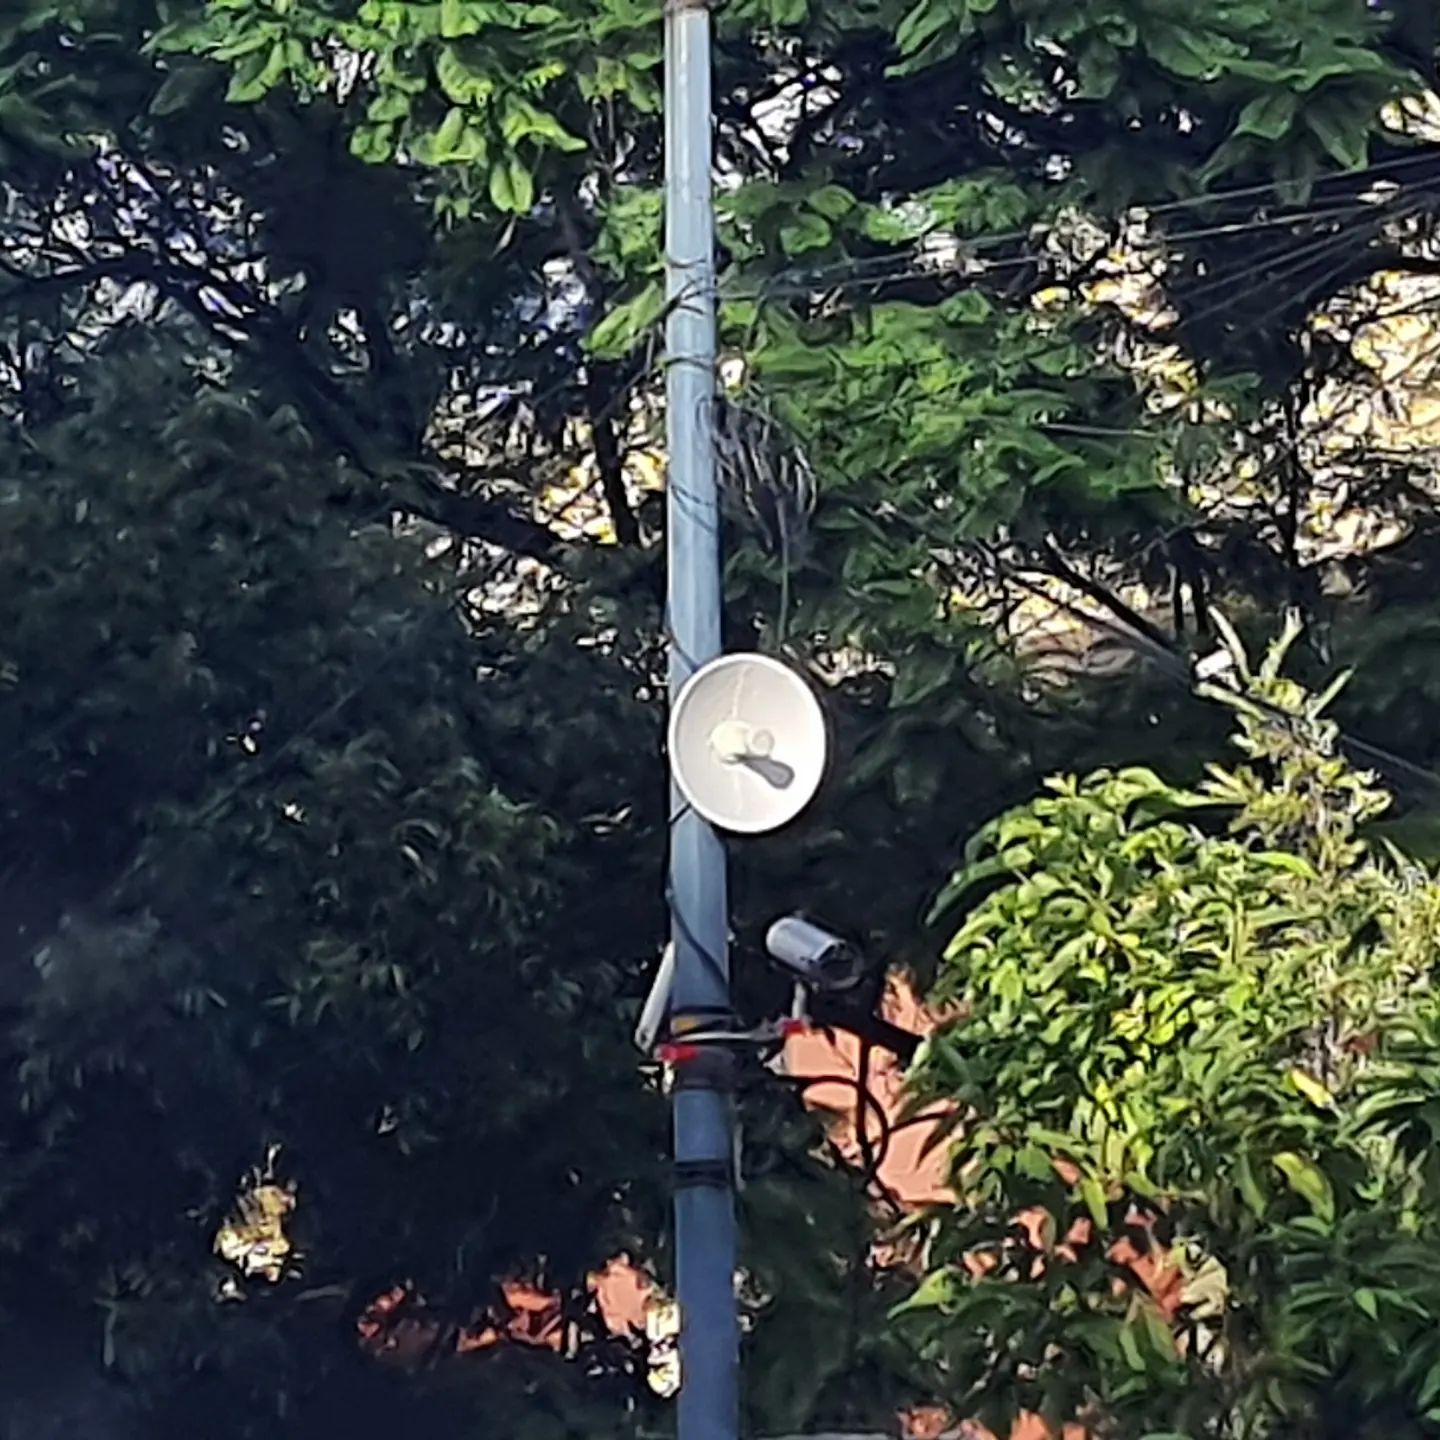 Do you know what is this? #SurveillanceInBangalore